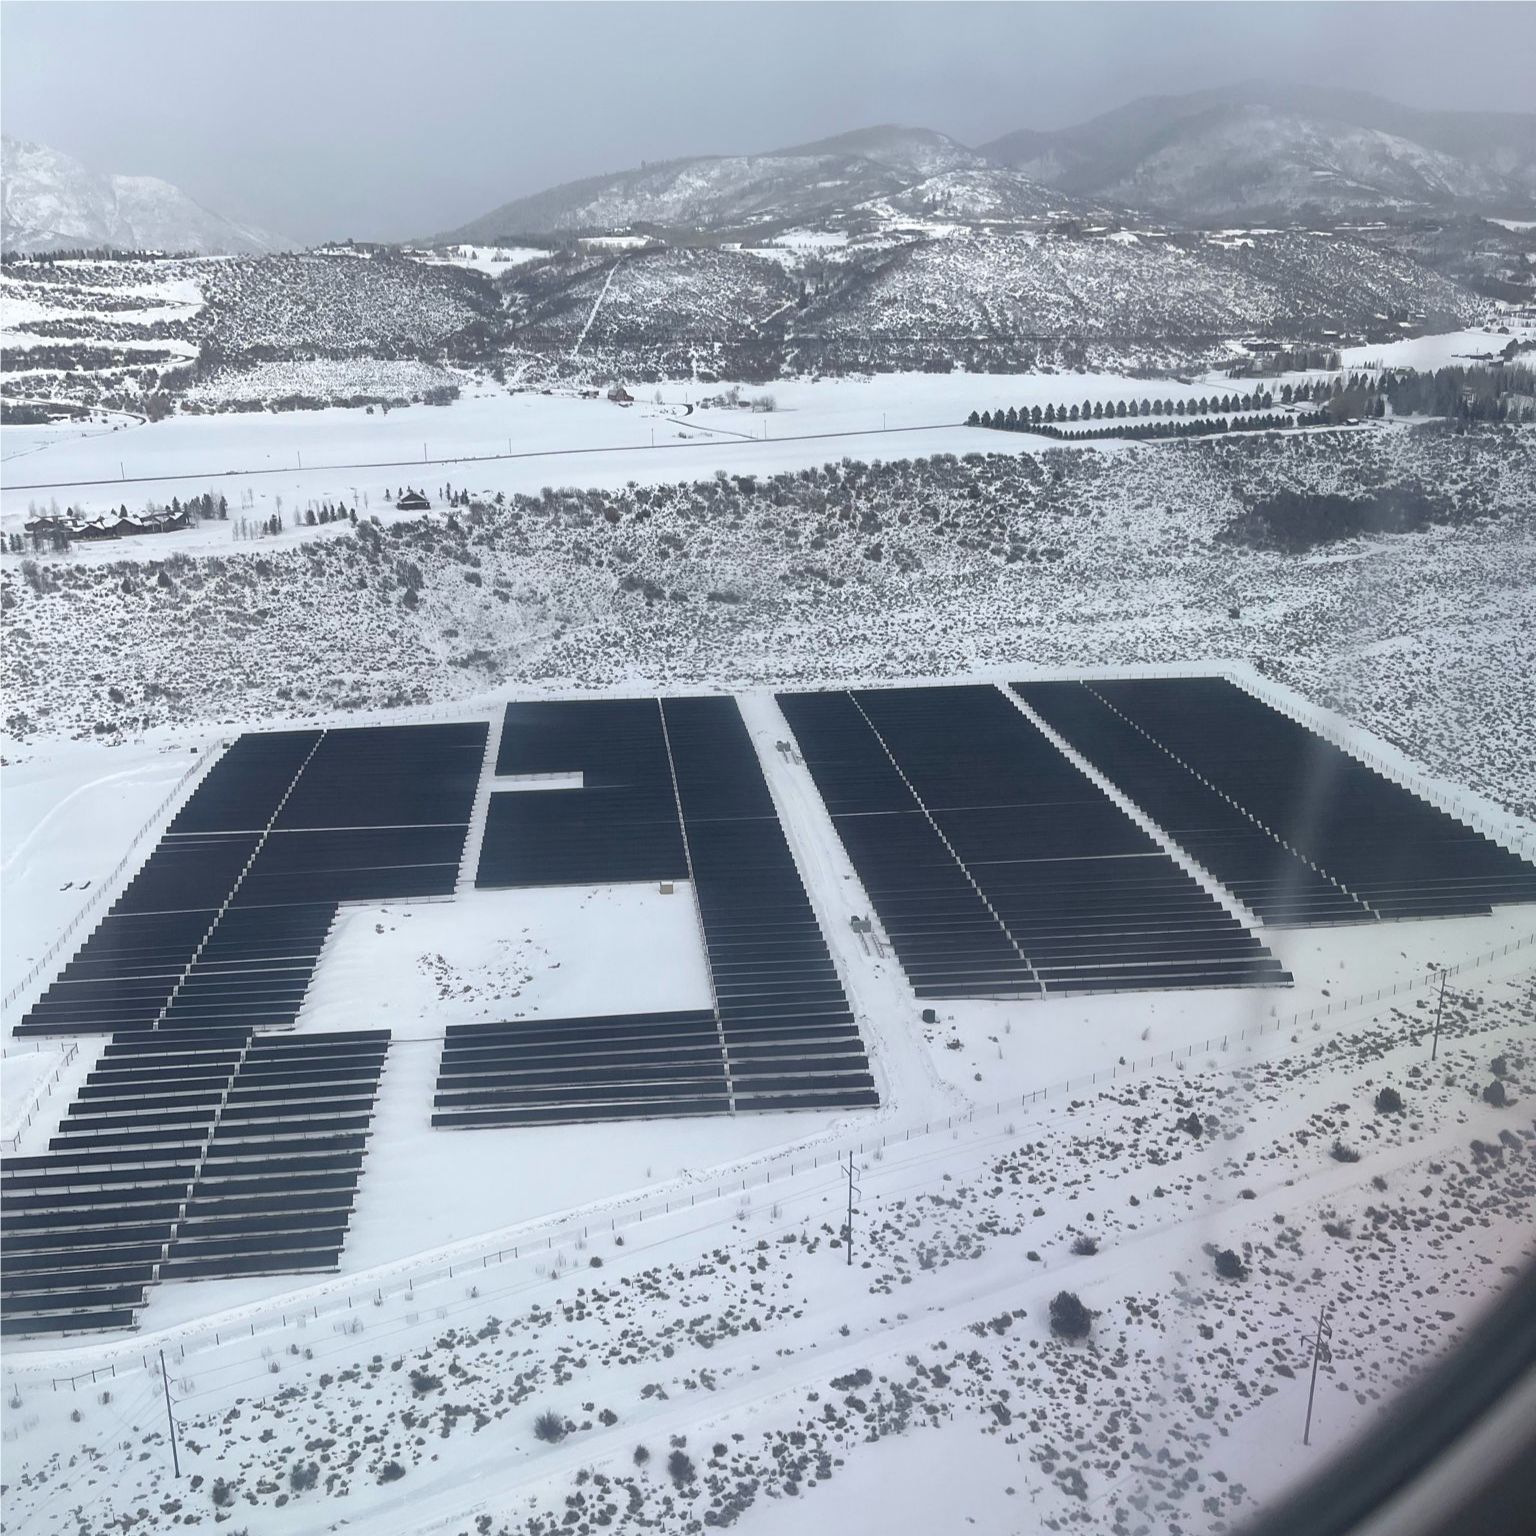 5 MW, 35-acre Pitkin Solar project in beautiful, snowy Aspen, Colorado